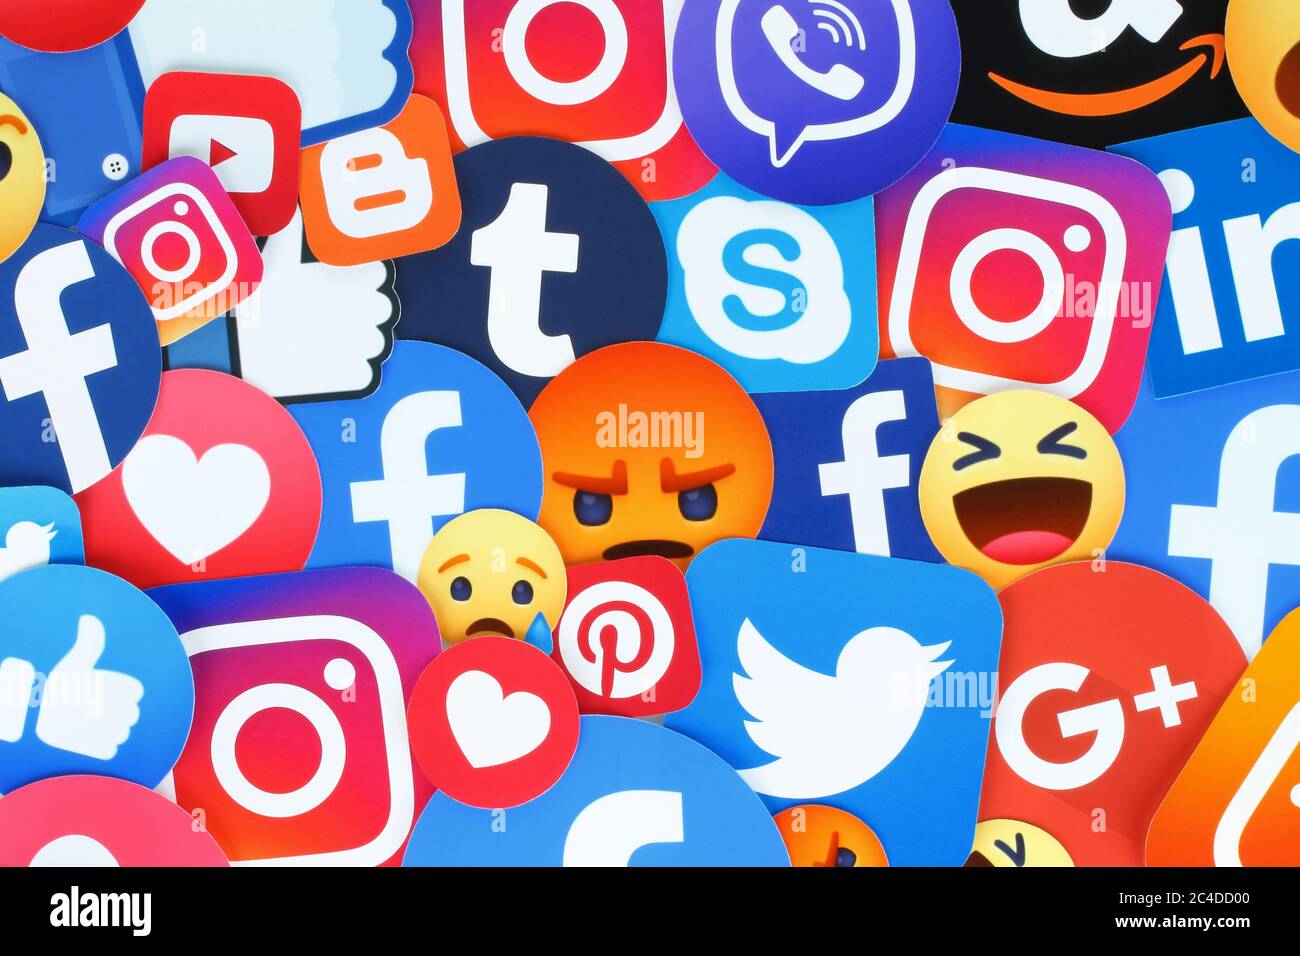 Kiew, Ukraine - 27. November 2019: Hintergrund der berühmten Social-Media-Icons wie: Facebook, Twitter, Blogger, Linkedin, Tumblr, Facebook Reaktionen A Stockfoto